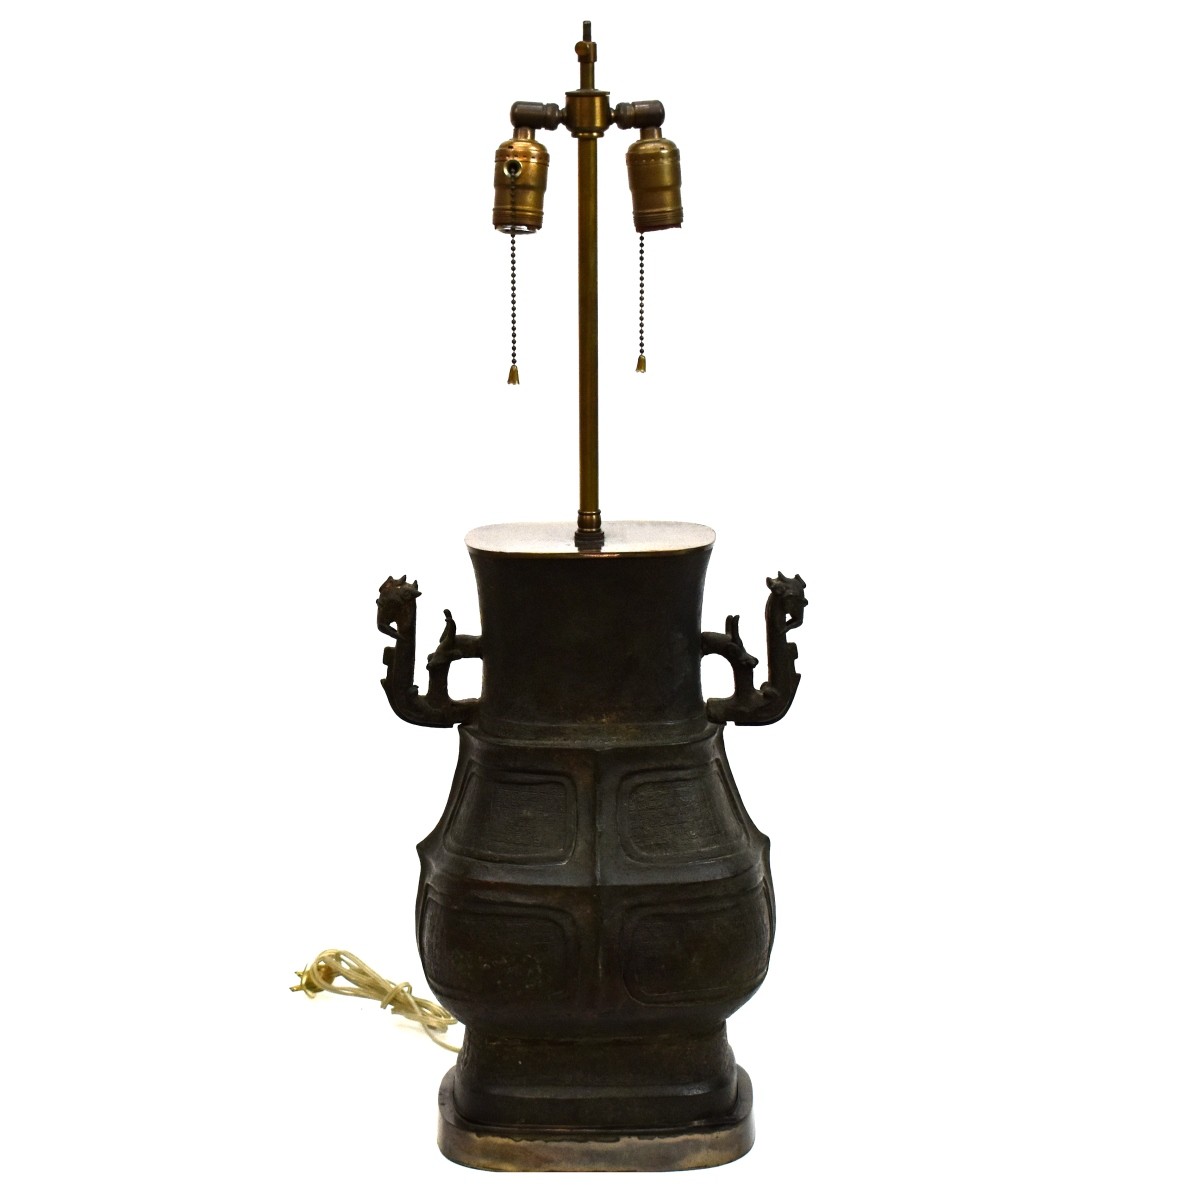 Vintage Chinese Metal Vase Mounted as a Lamp